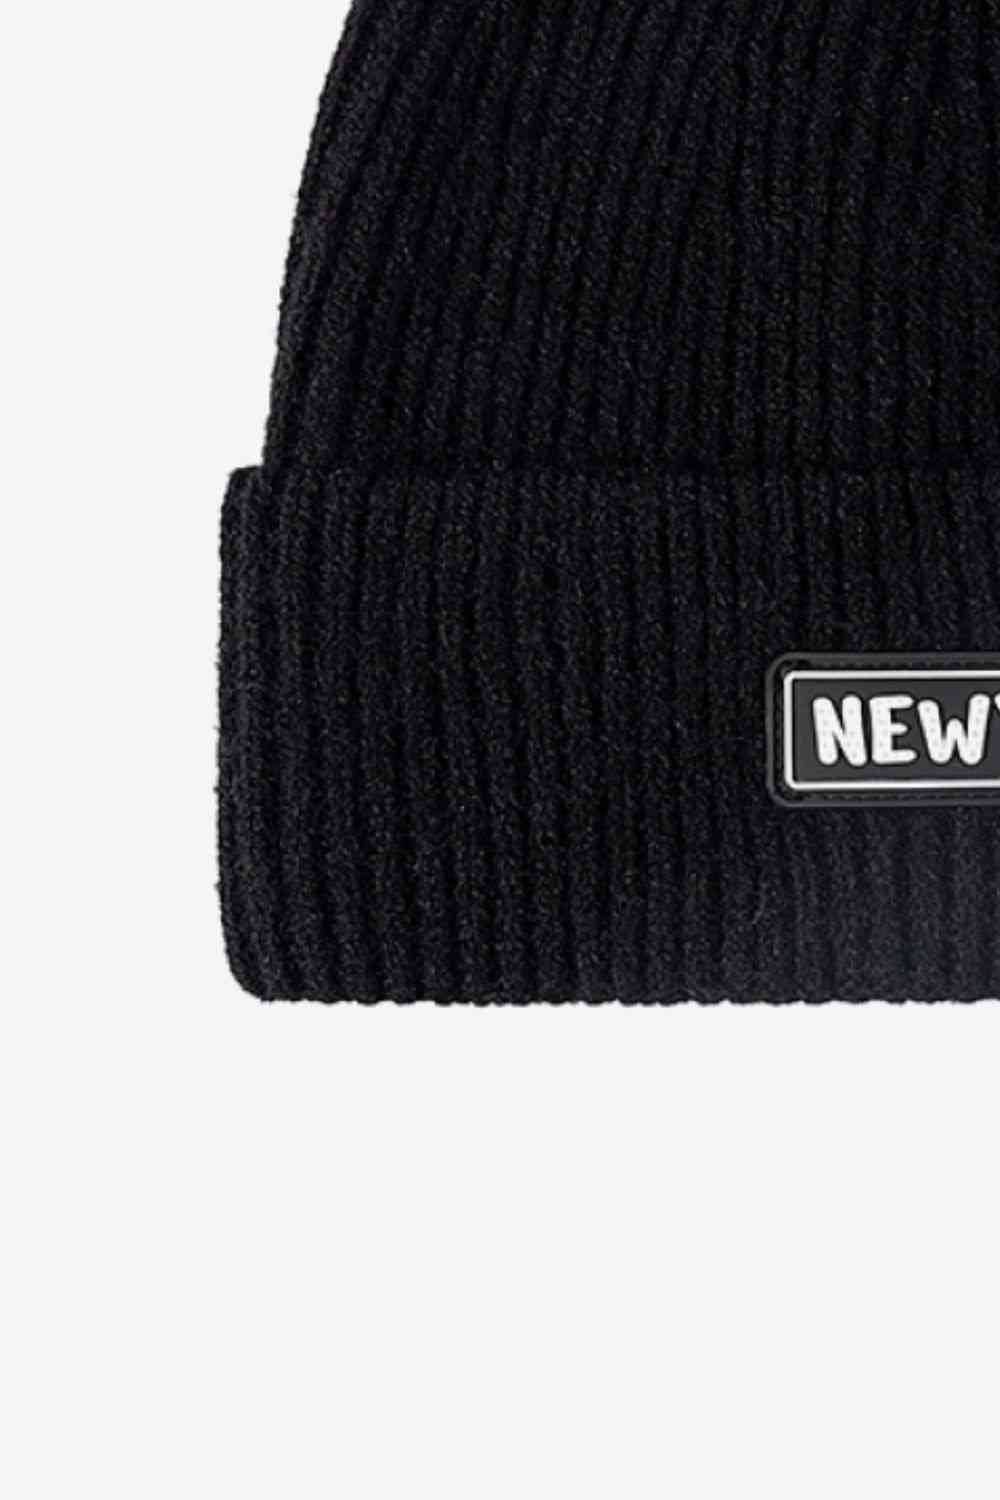 Black NEWYORK Patch Rib-Knit Cuffed Beanie Winter Accessories